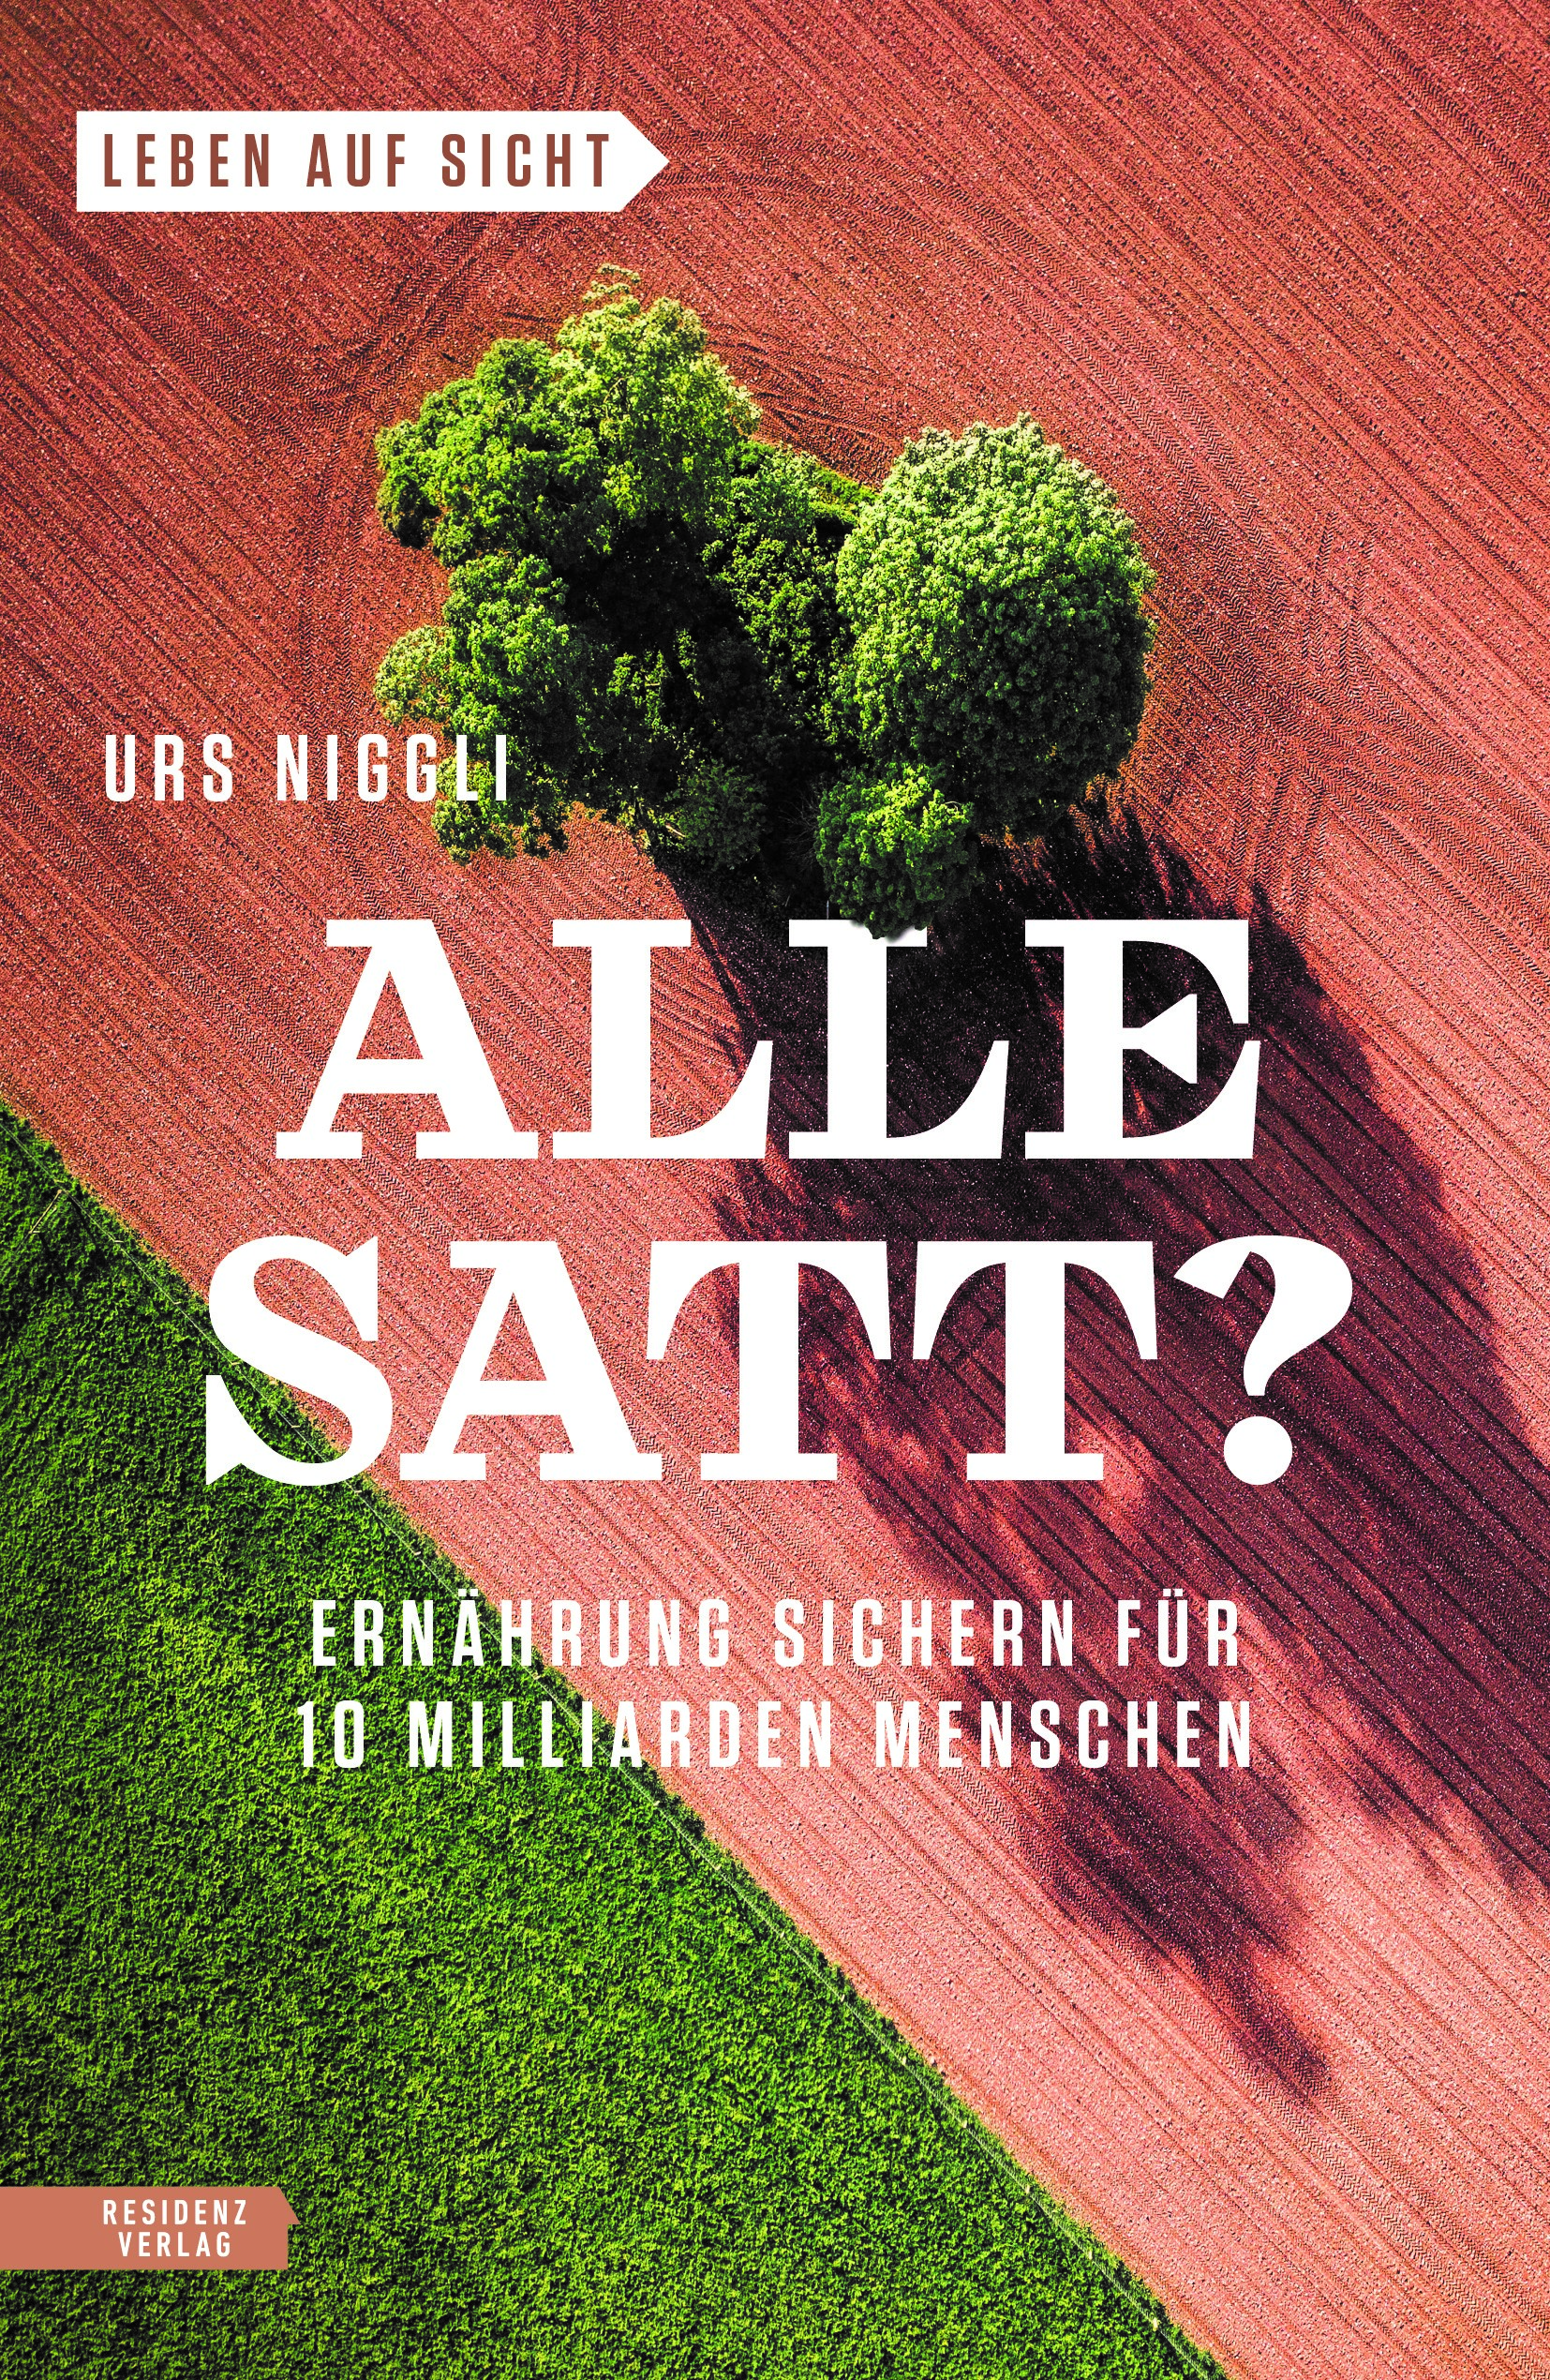 Urs Niggli: Alle satt? (German language, 2021, Residenz Verlag)